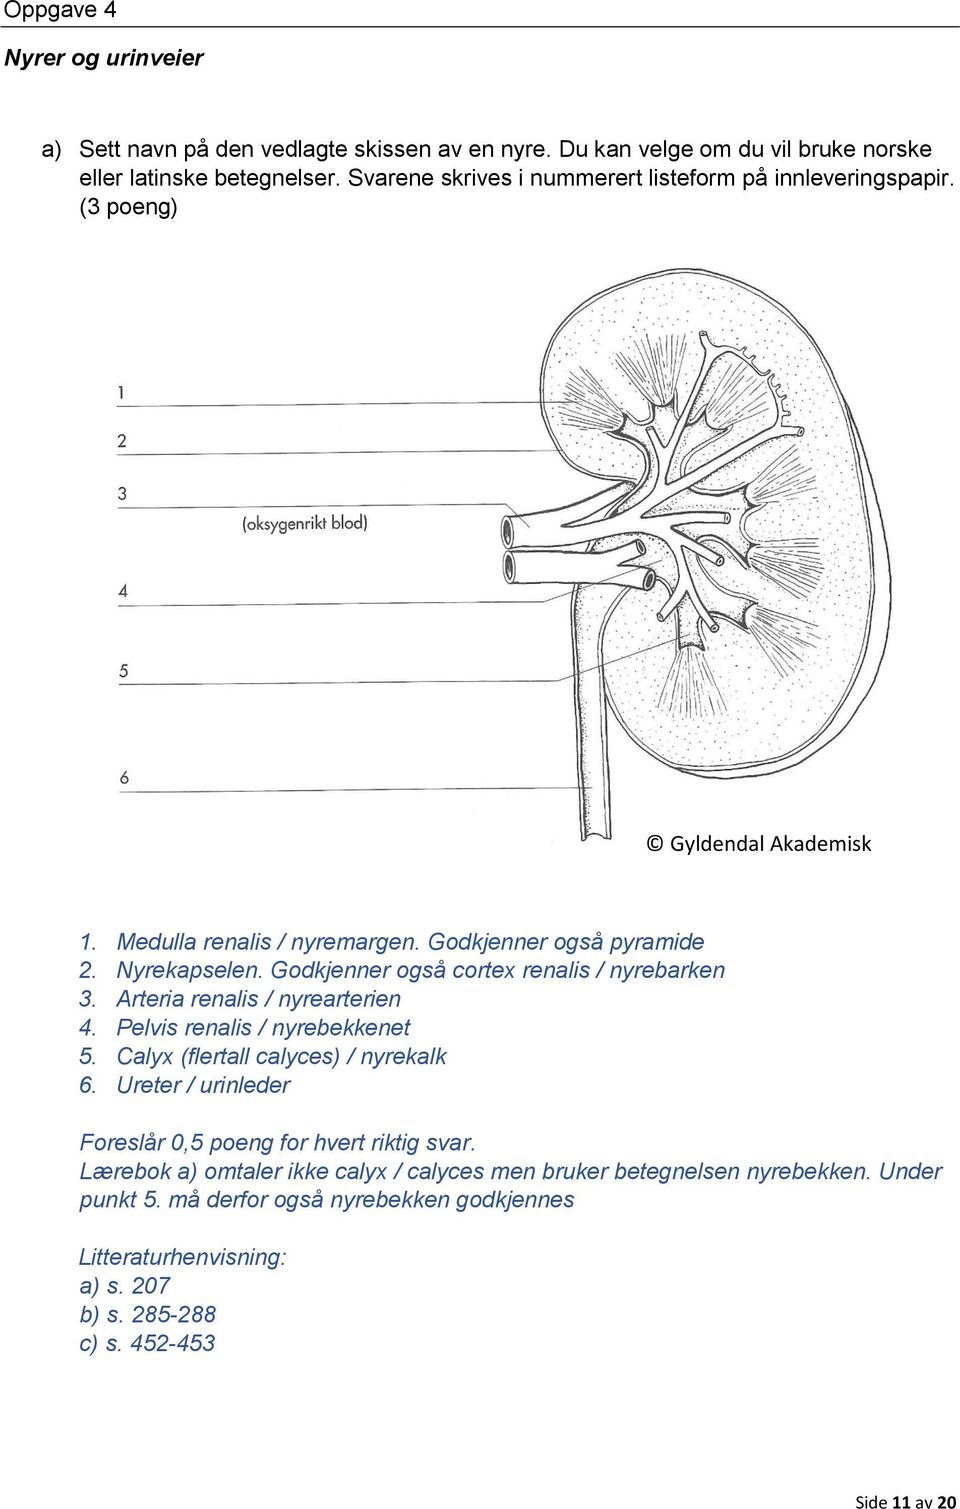 Godkjenner også cortex renalis / nyrebarken 3. Arteria renalis / nyrearterien 4. Pelvis renalis / nyrebekkenet 5. Calyx (flertall calyces) / nyrekalk 6.